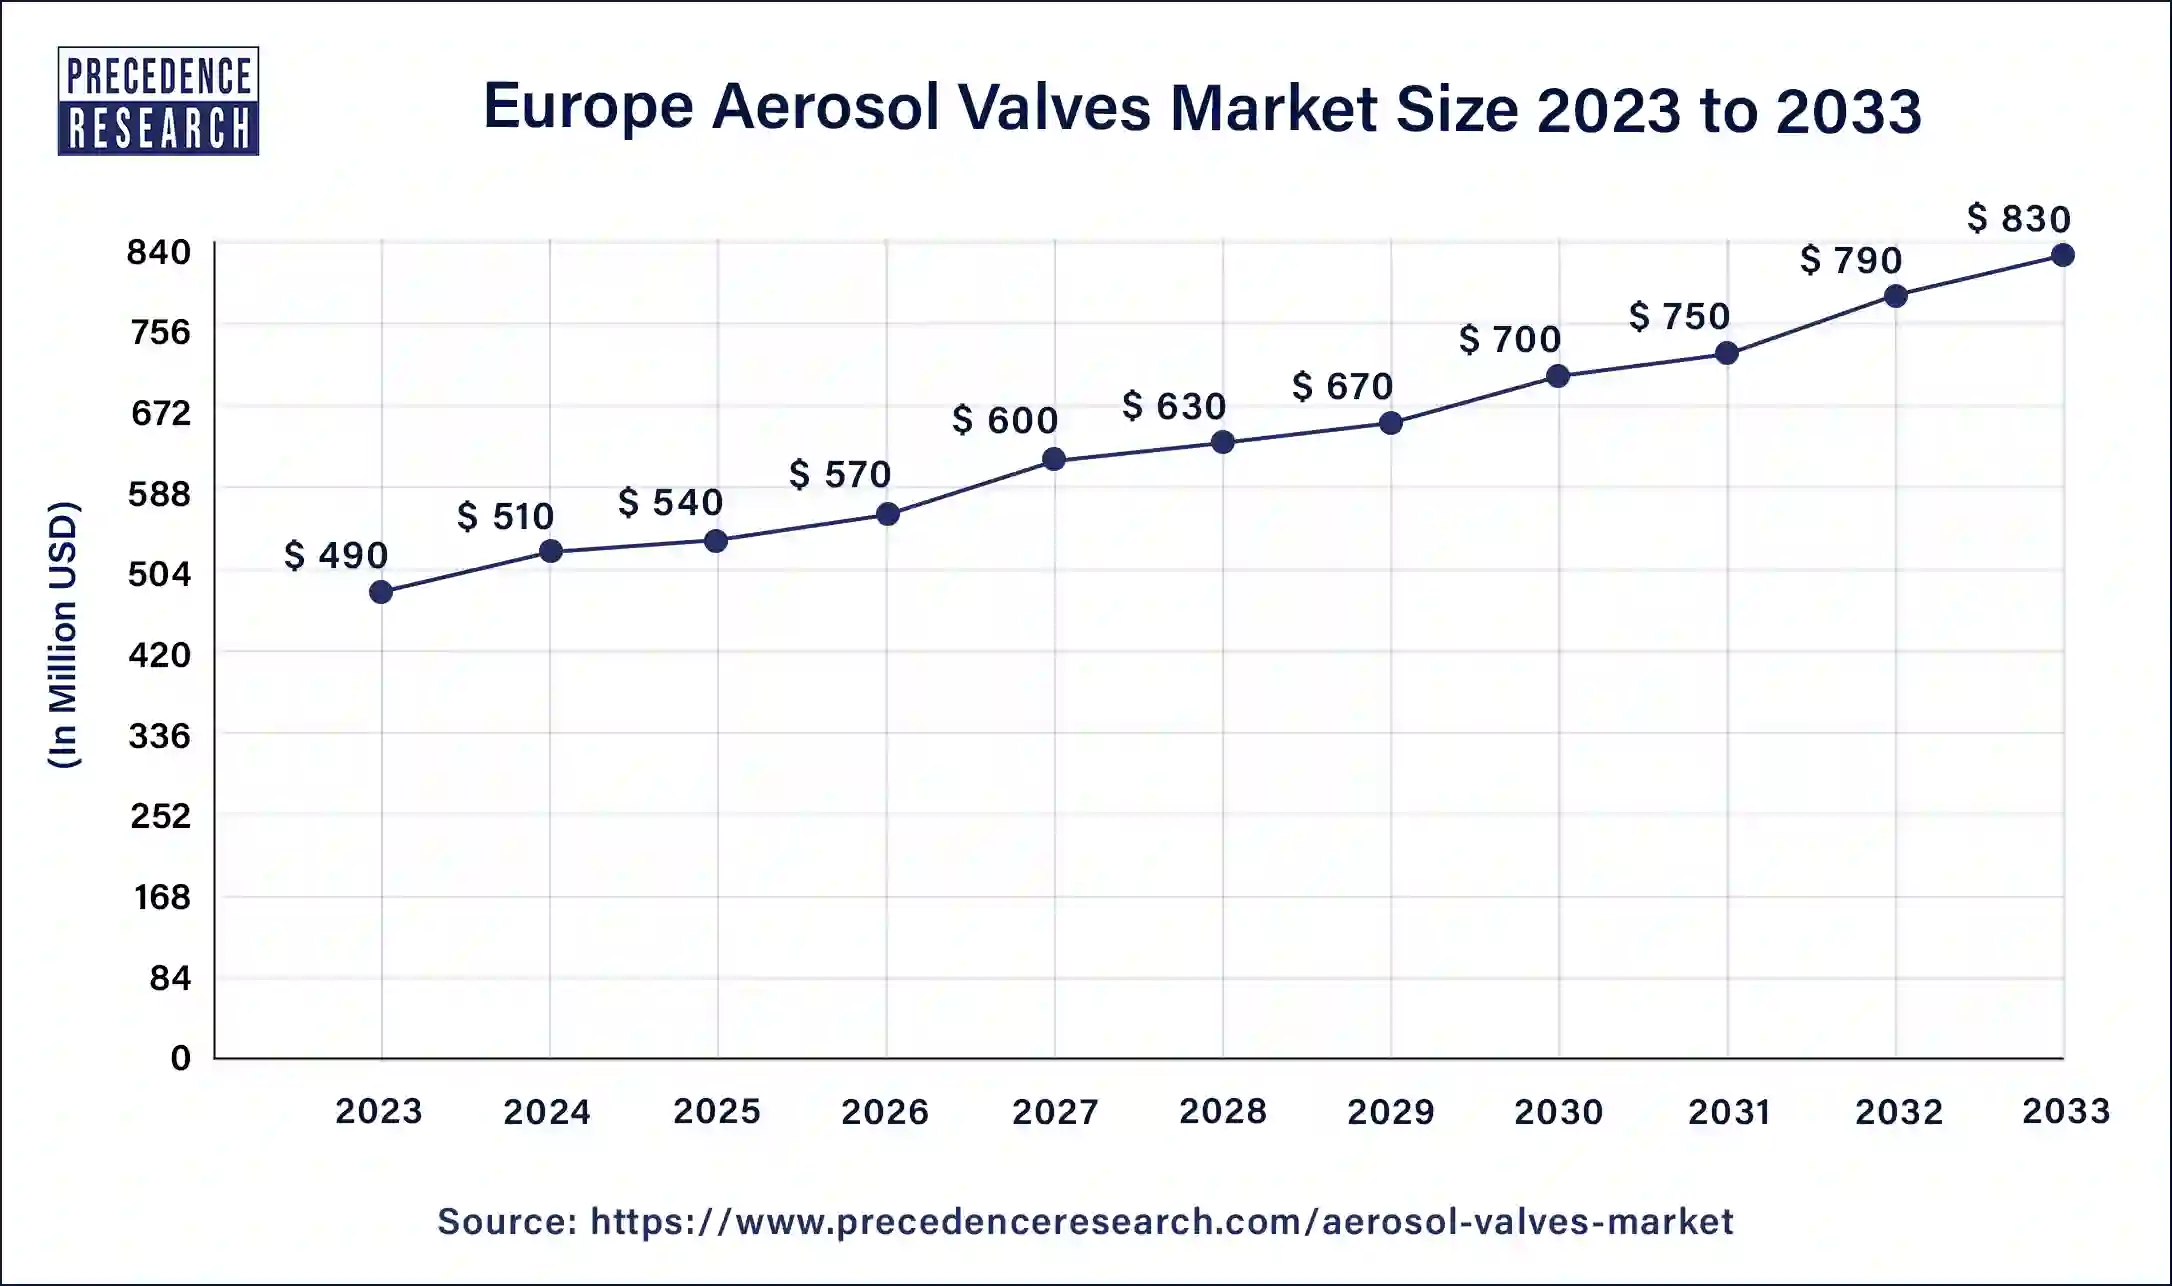 Europe Aerosol Valves Market Size 2024 to 2033